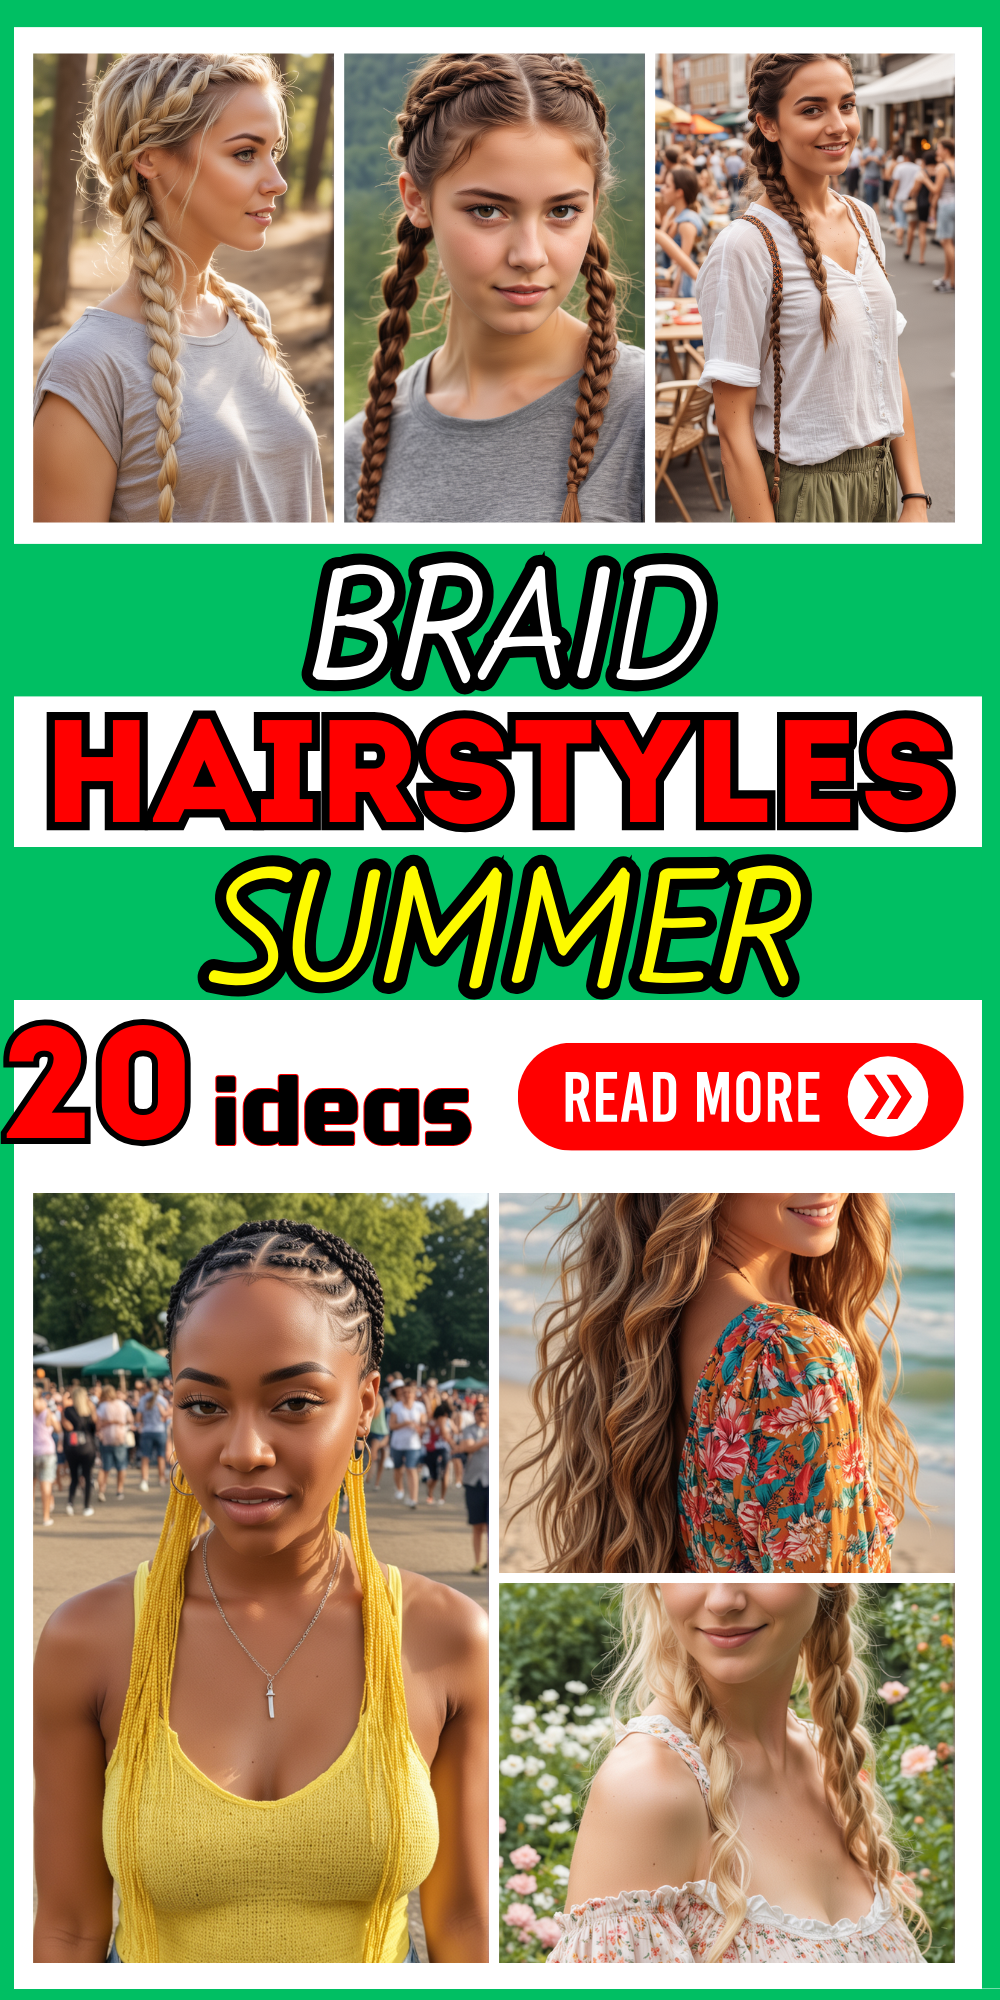 20 Summer Braid Hairstyles: Top Trends for Long, Medium & Short Hair